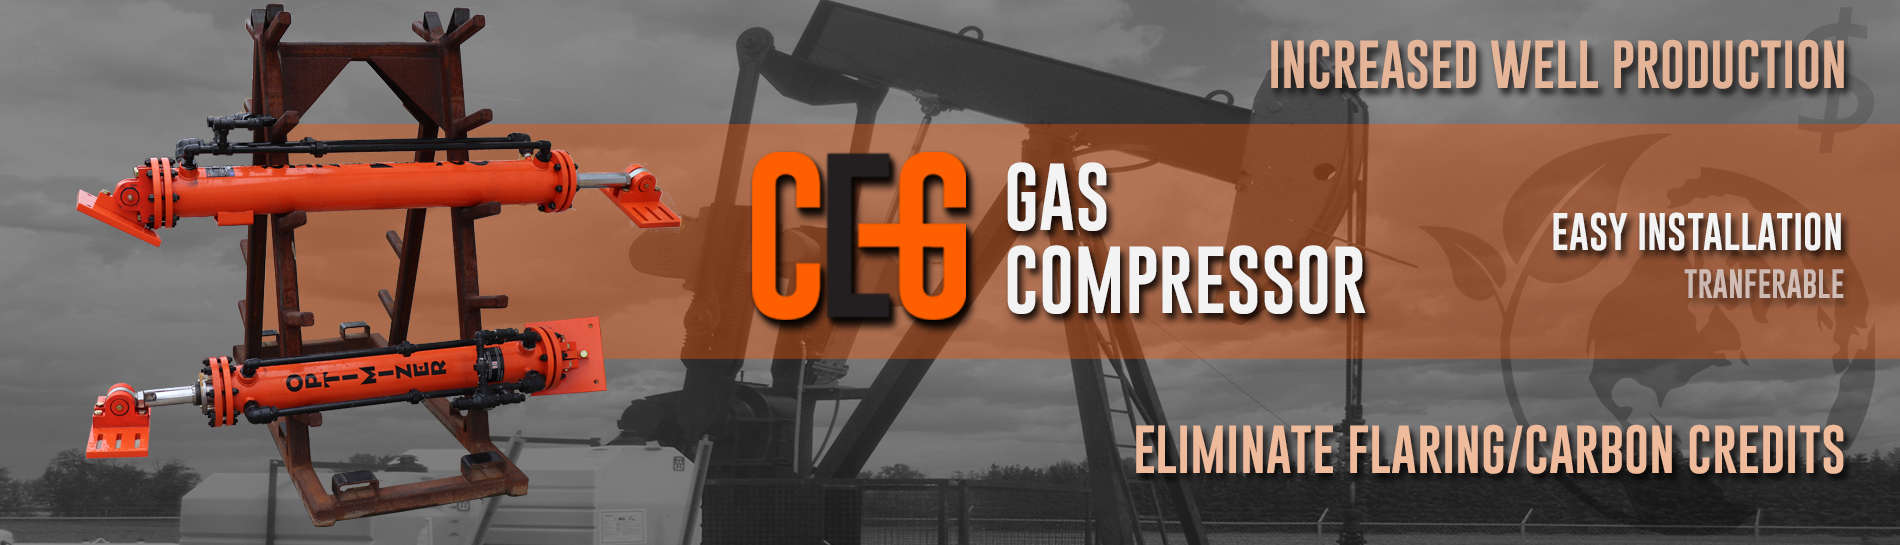 CEG - Beam Compressor Slideshow Image